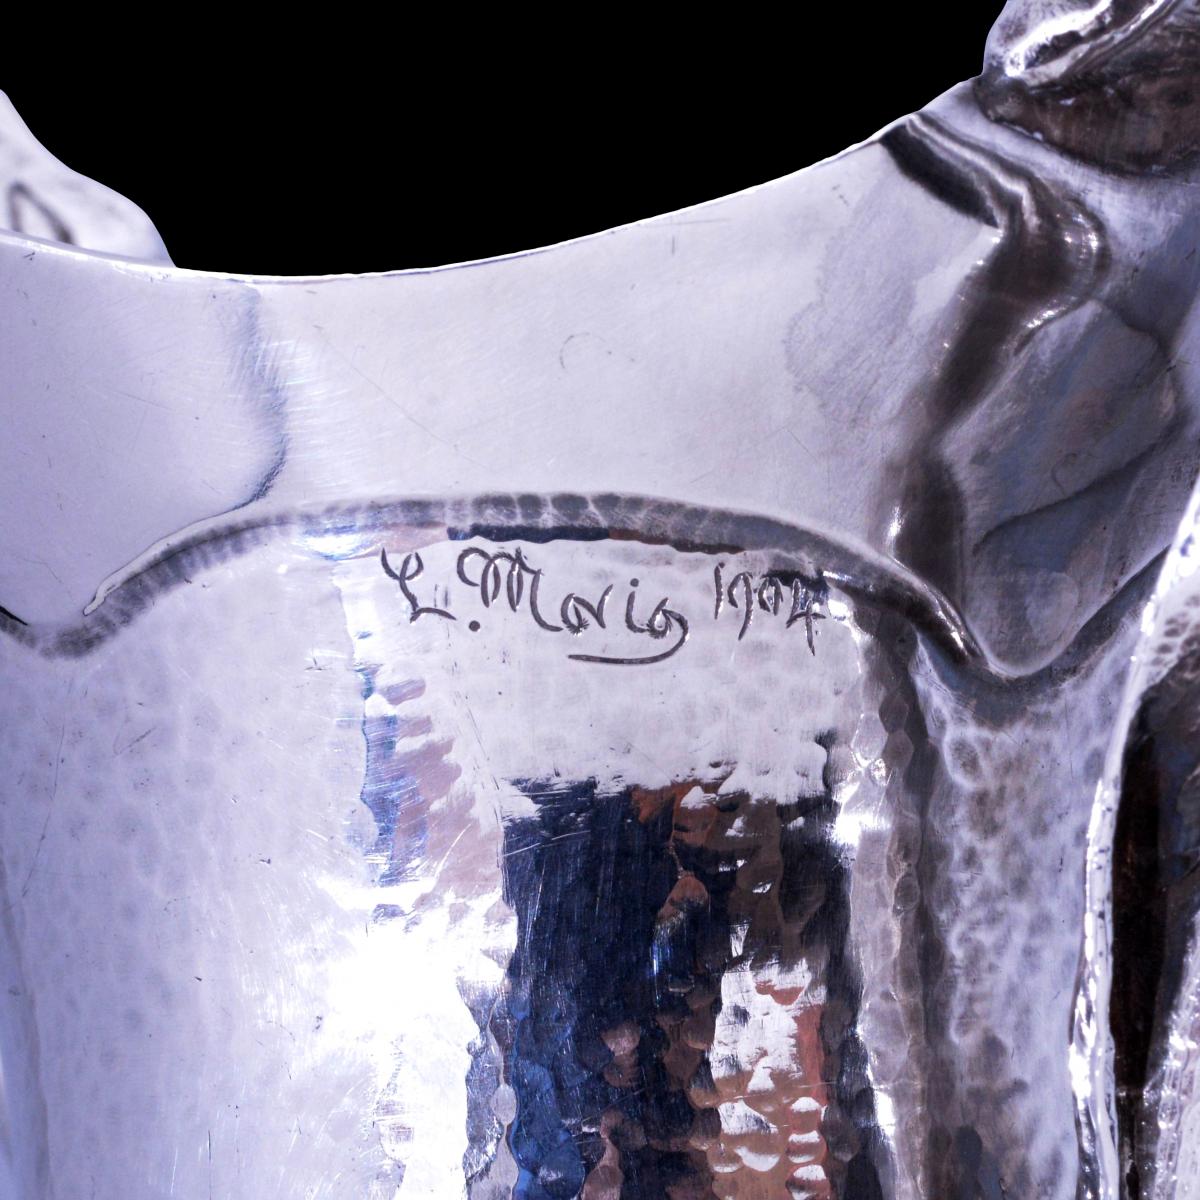 Latino Movio silver vase